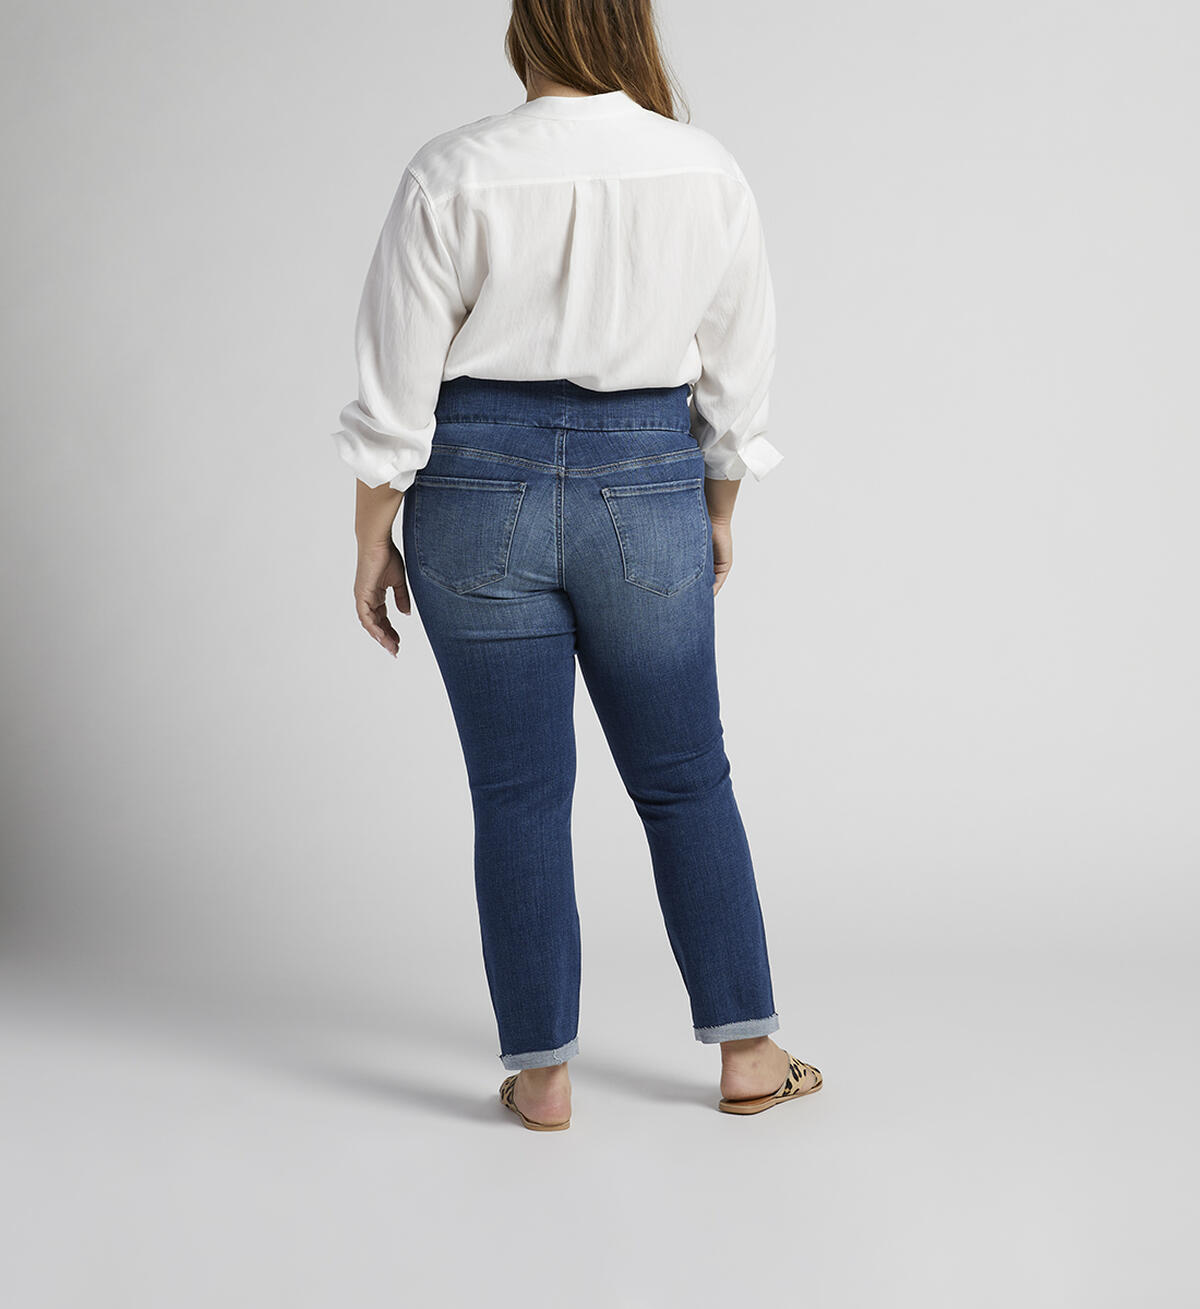 Amelia Mid Rise Slim Ankle Pull-On Jeans Plus Size, , hi-res image number 1